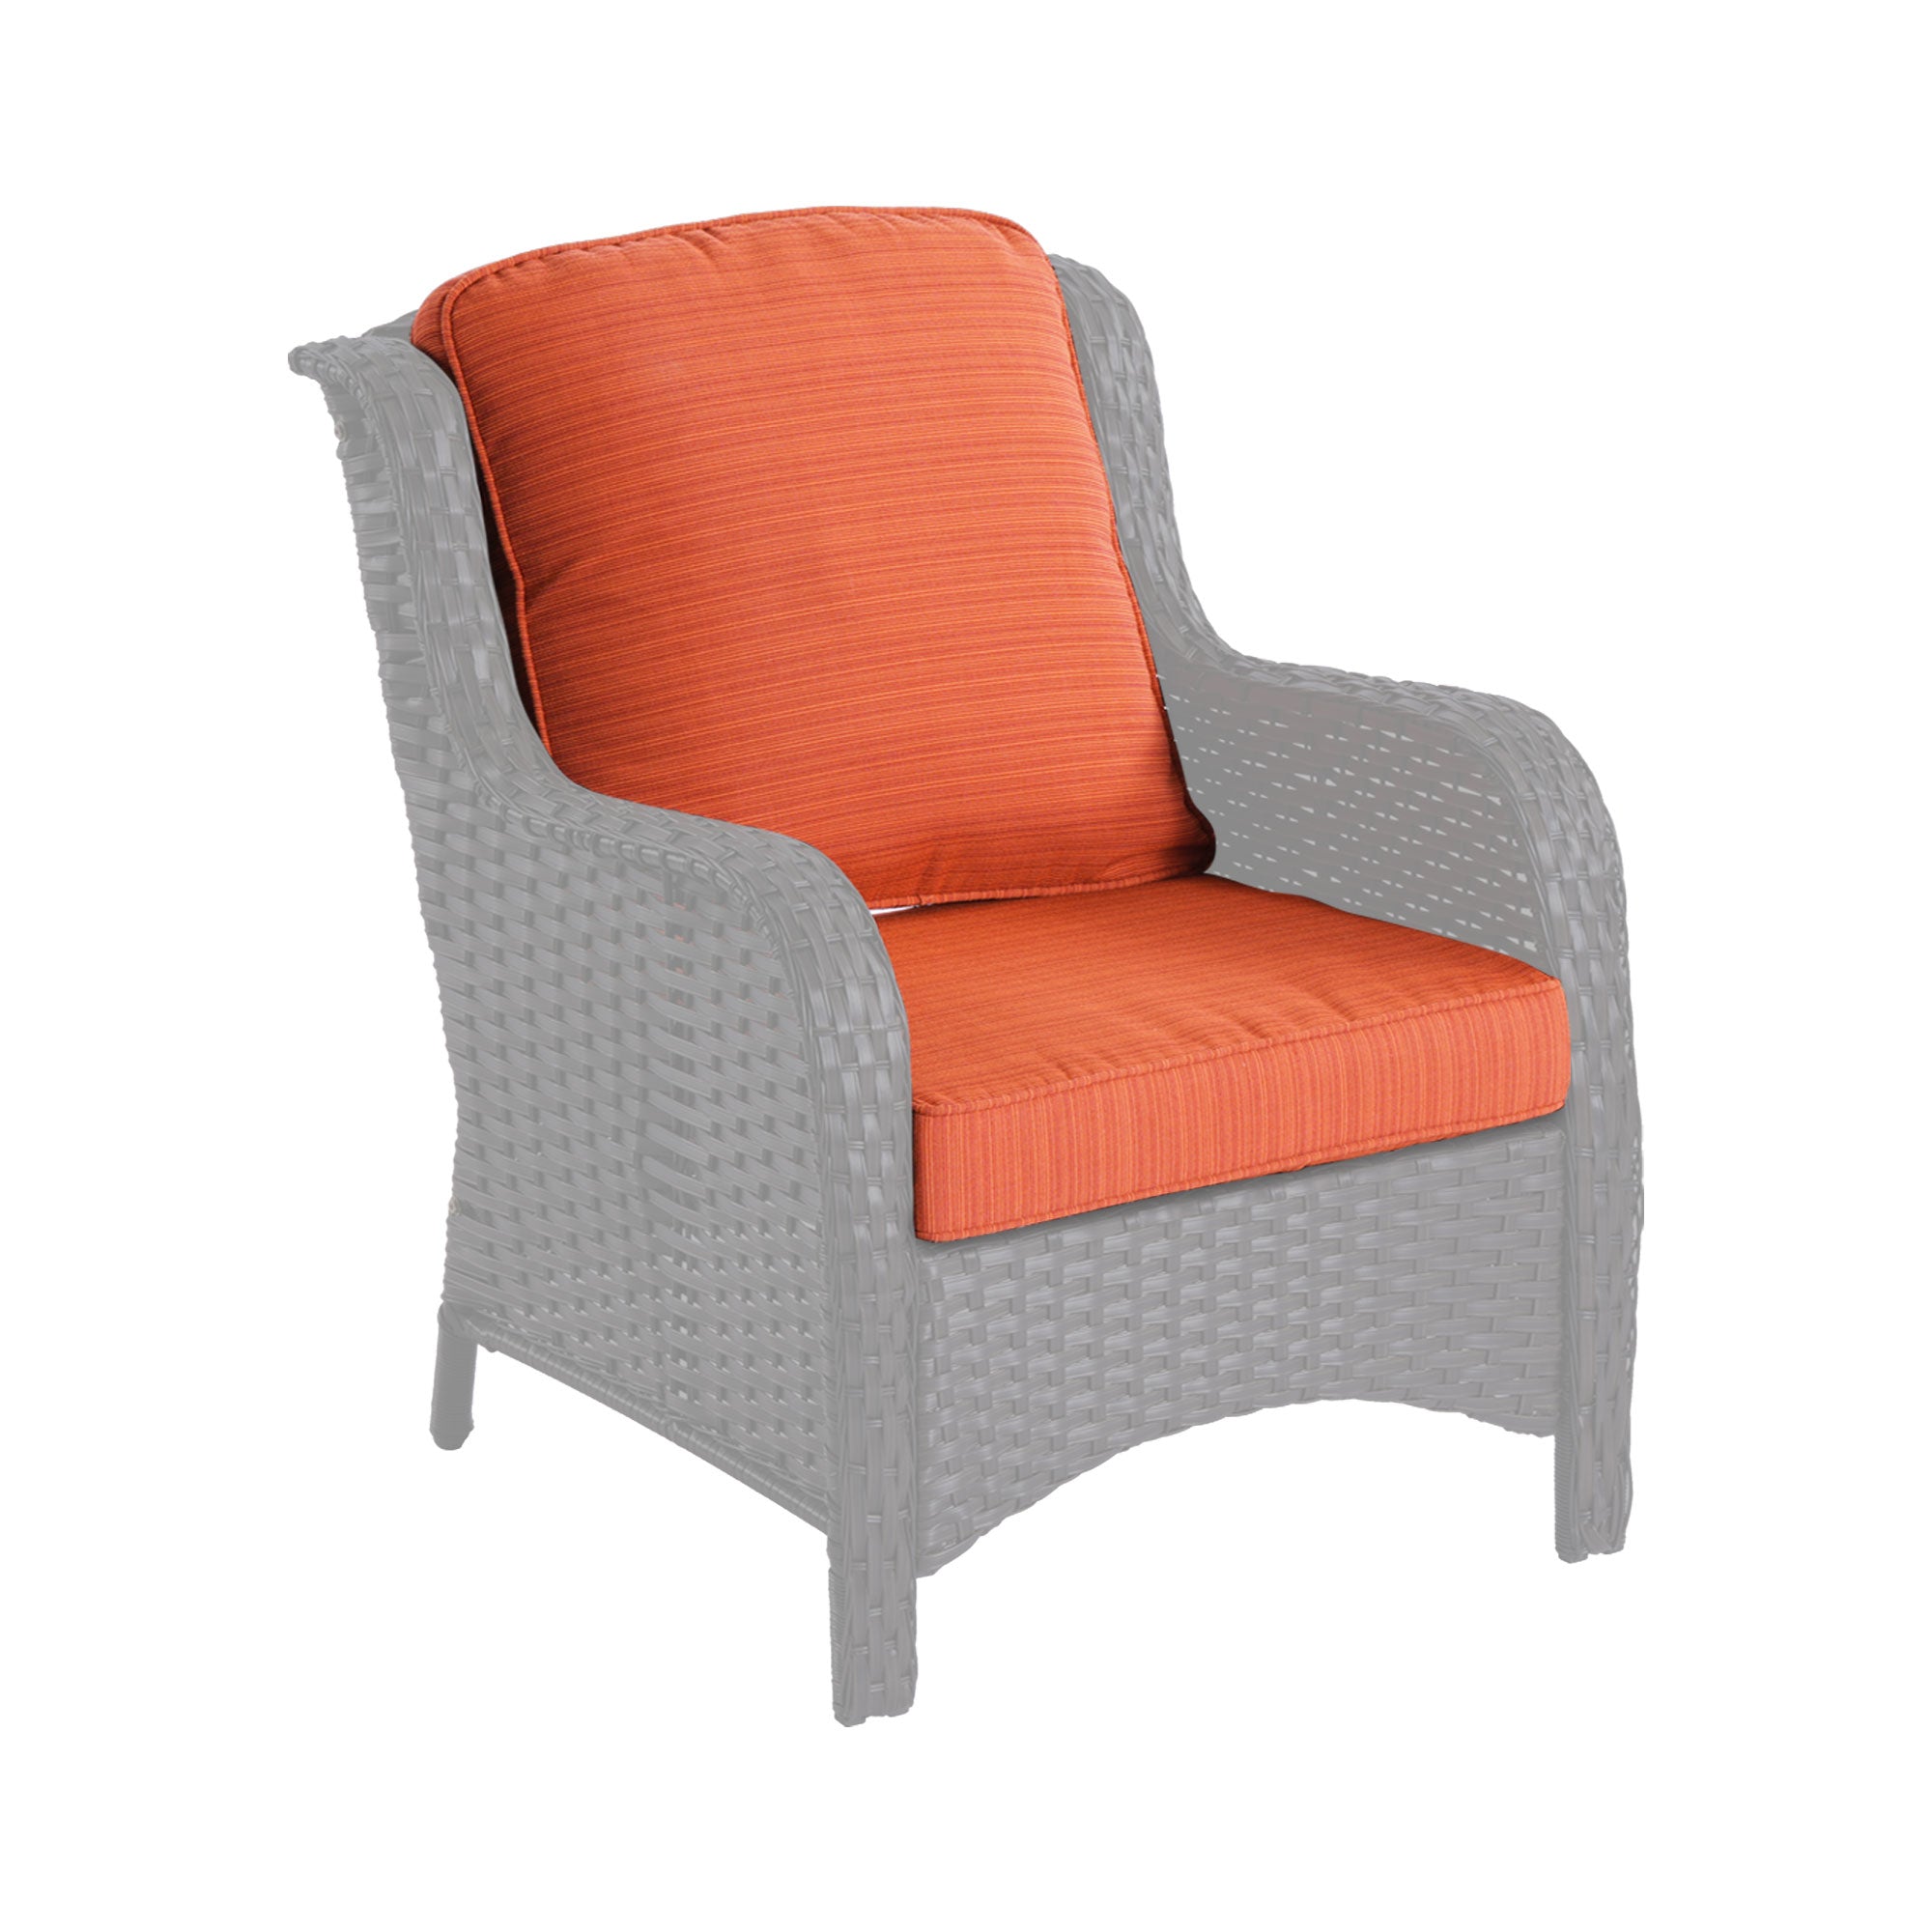 #Color_Orange Red|Type_Seat&Back Cushion